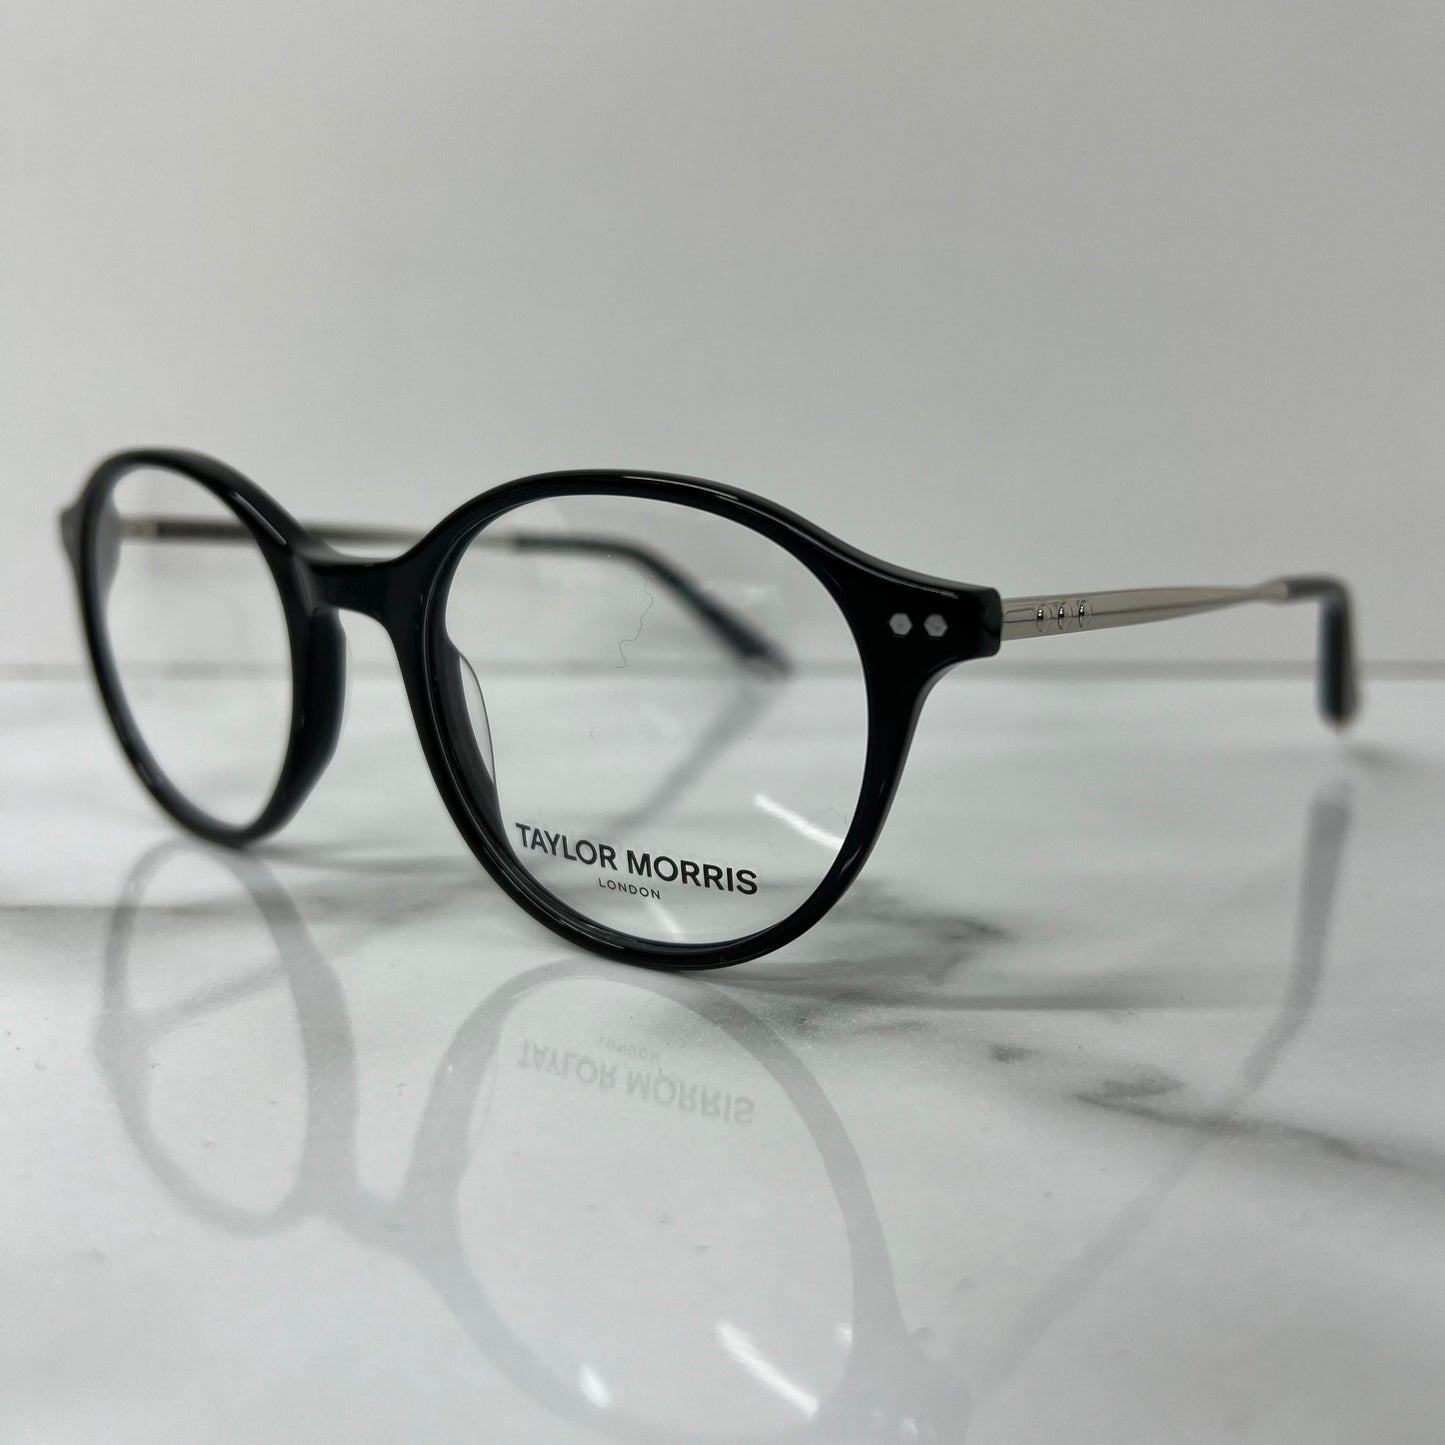 Taylor Morris W1 C1 Prescription Optical Glasses